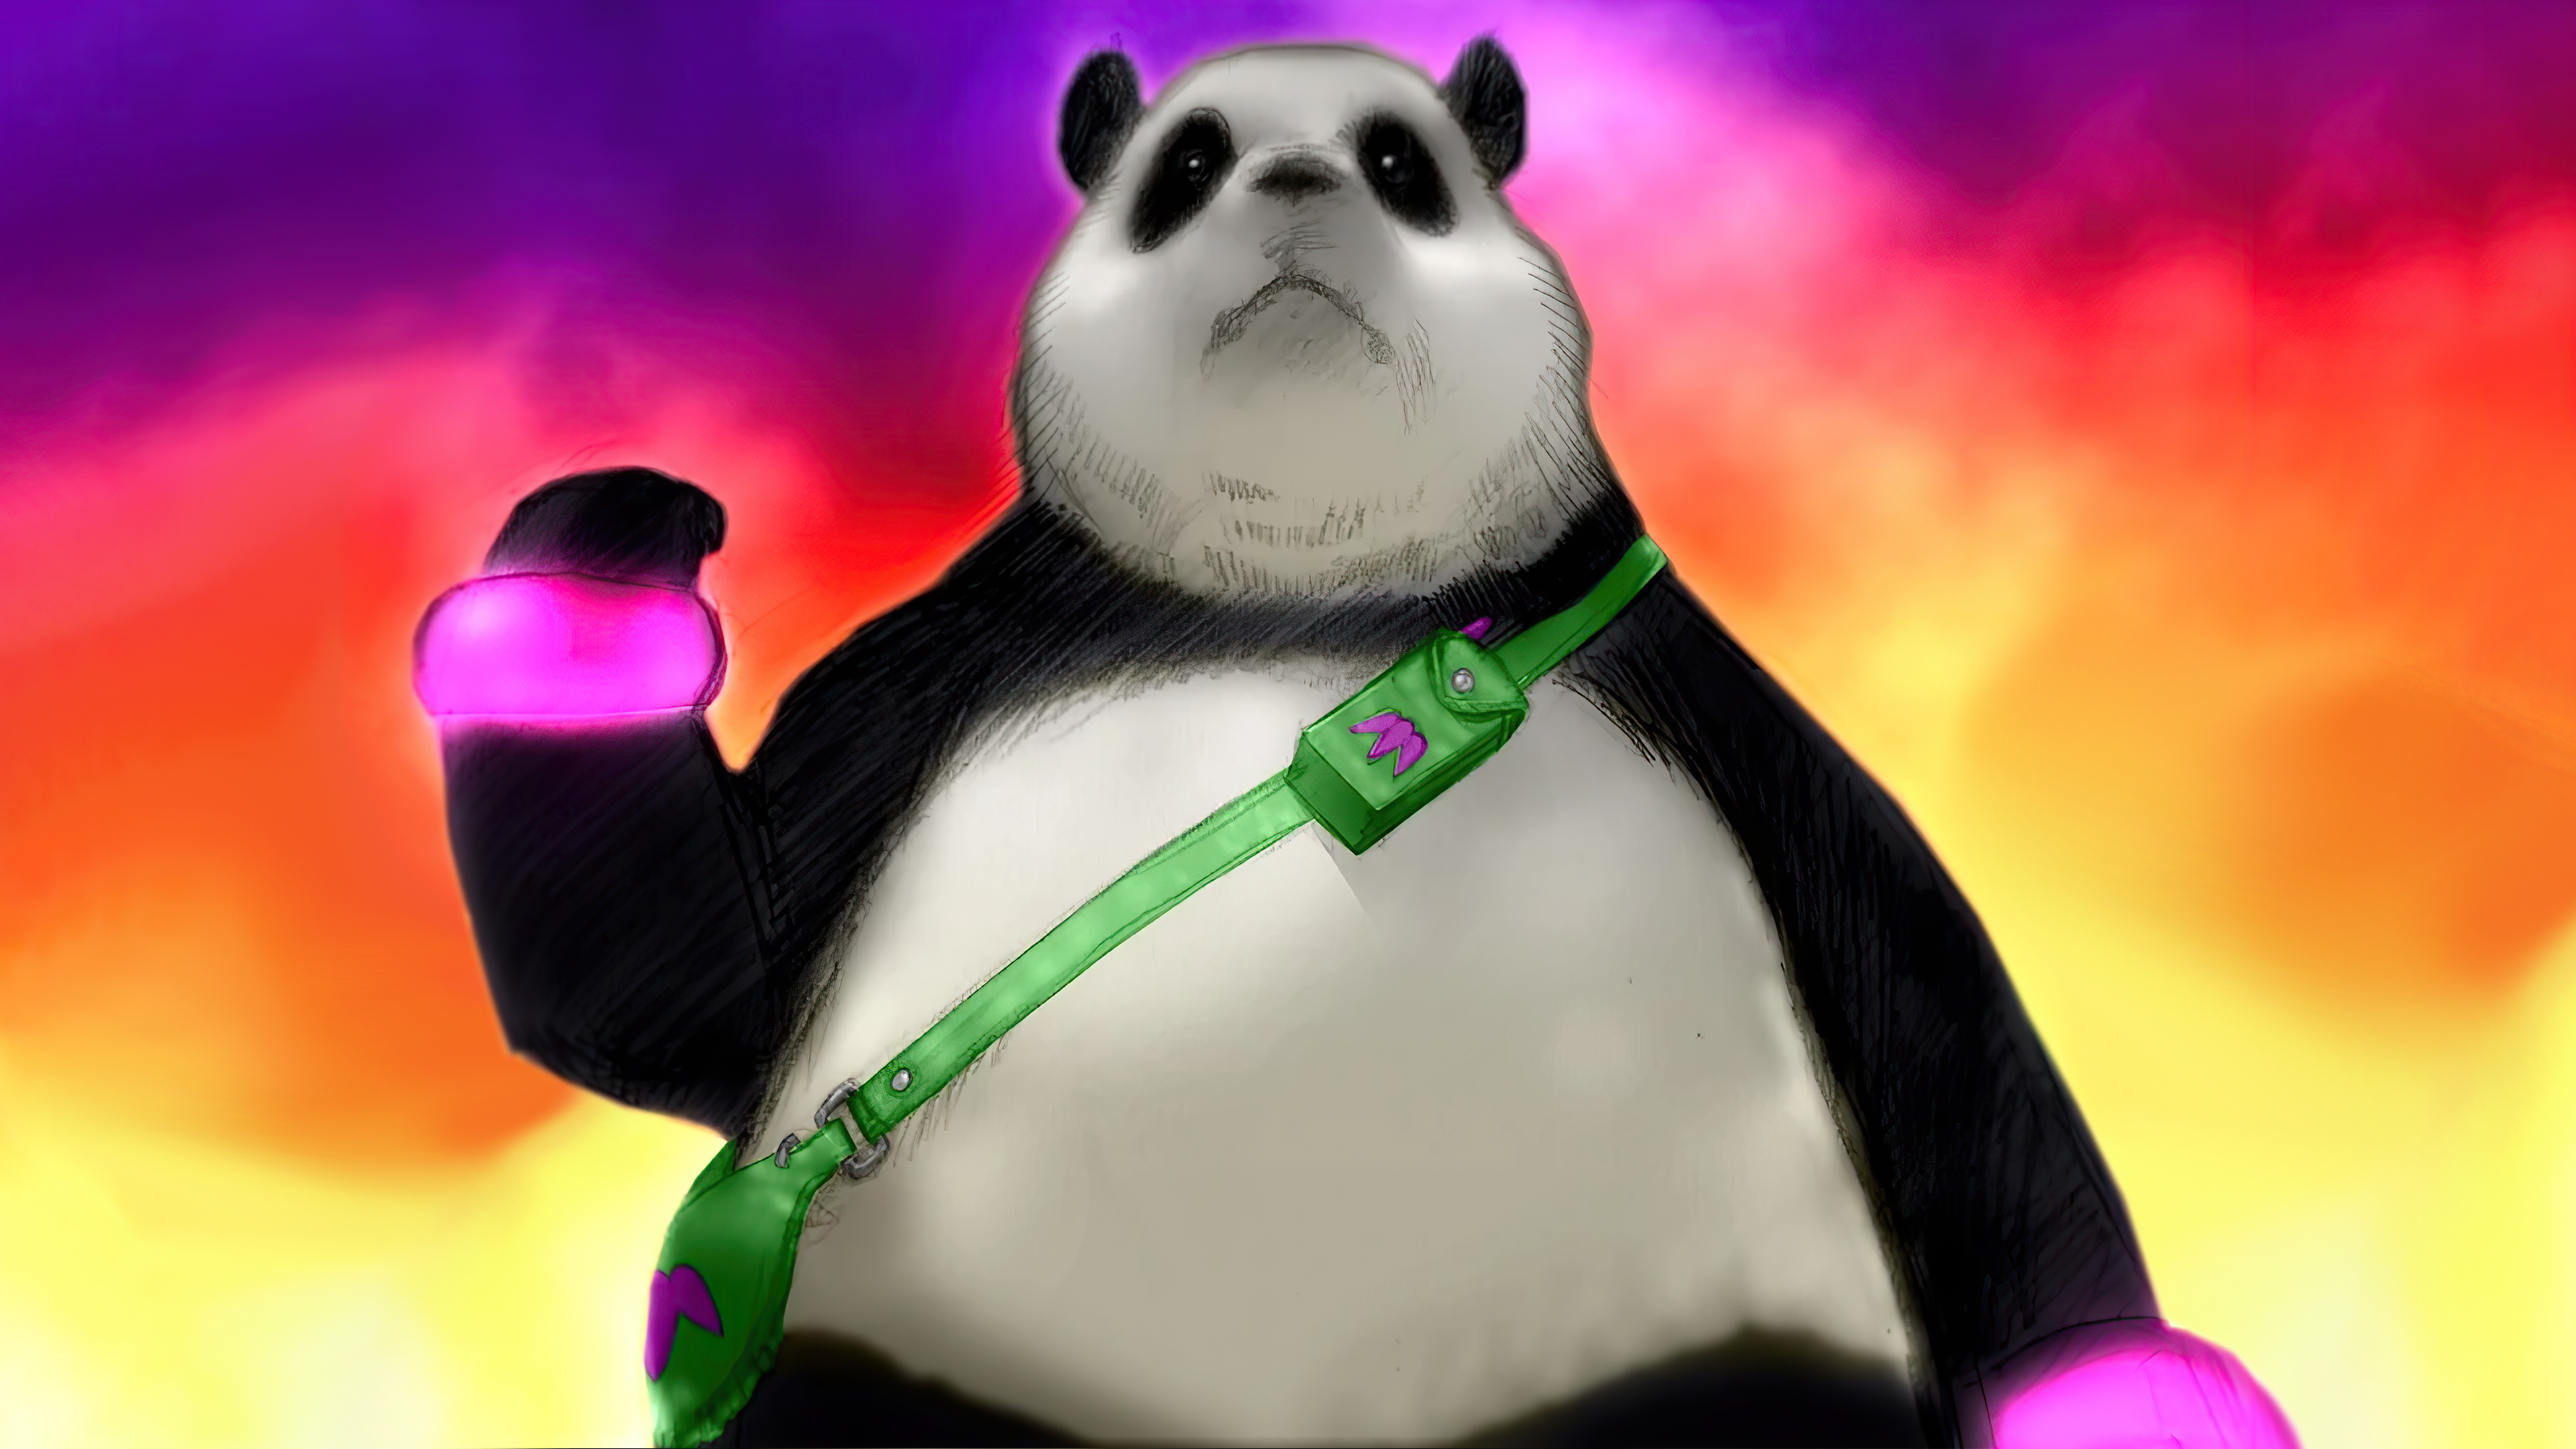 Panda 4K Wallpaper by TheI3arracuda on DeviantArt